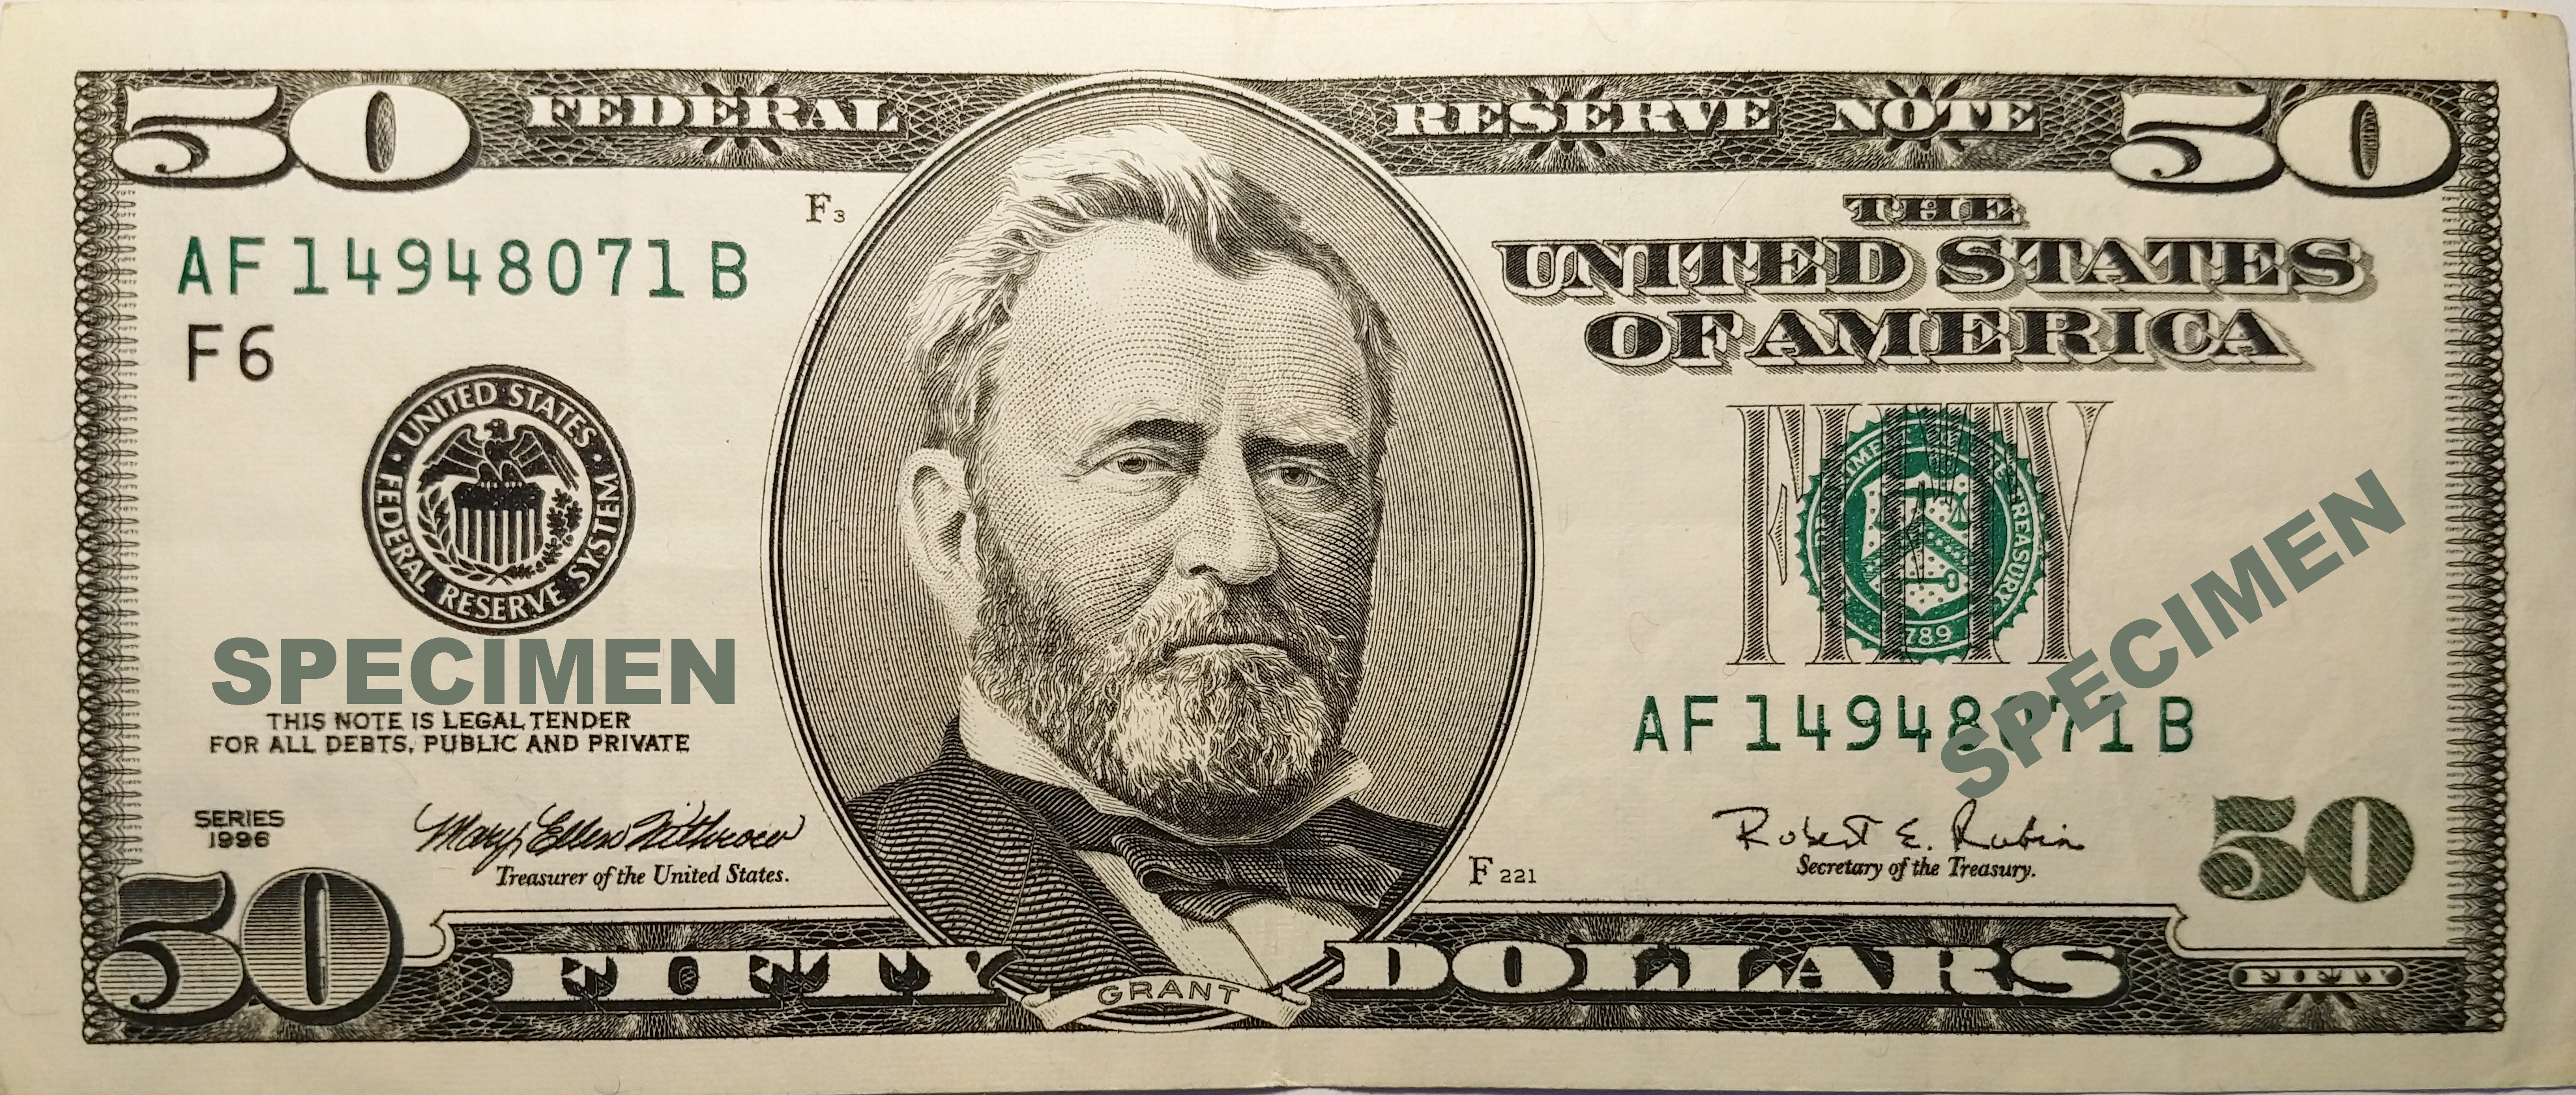 US 50 dollar bill Series 1996 - Counterfeit money detection